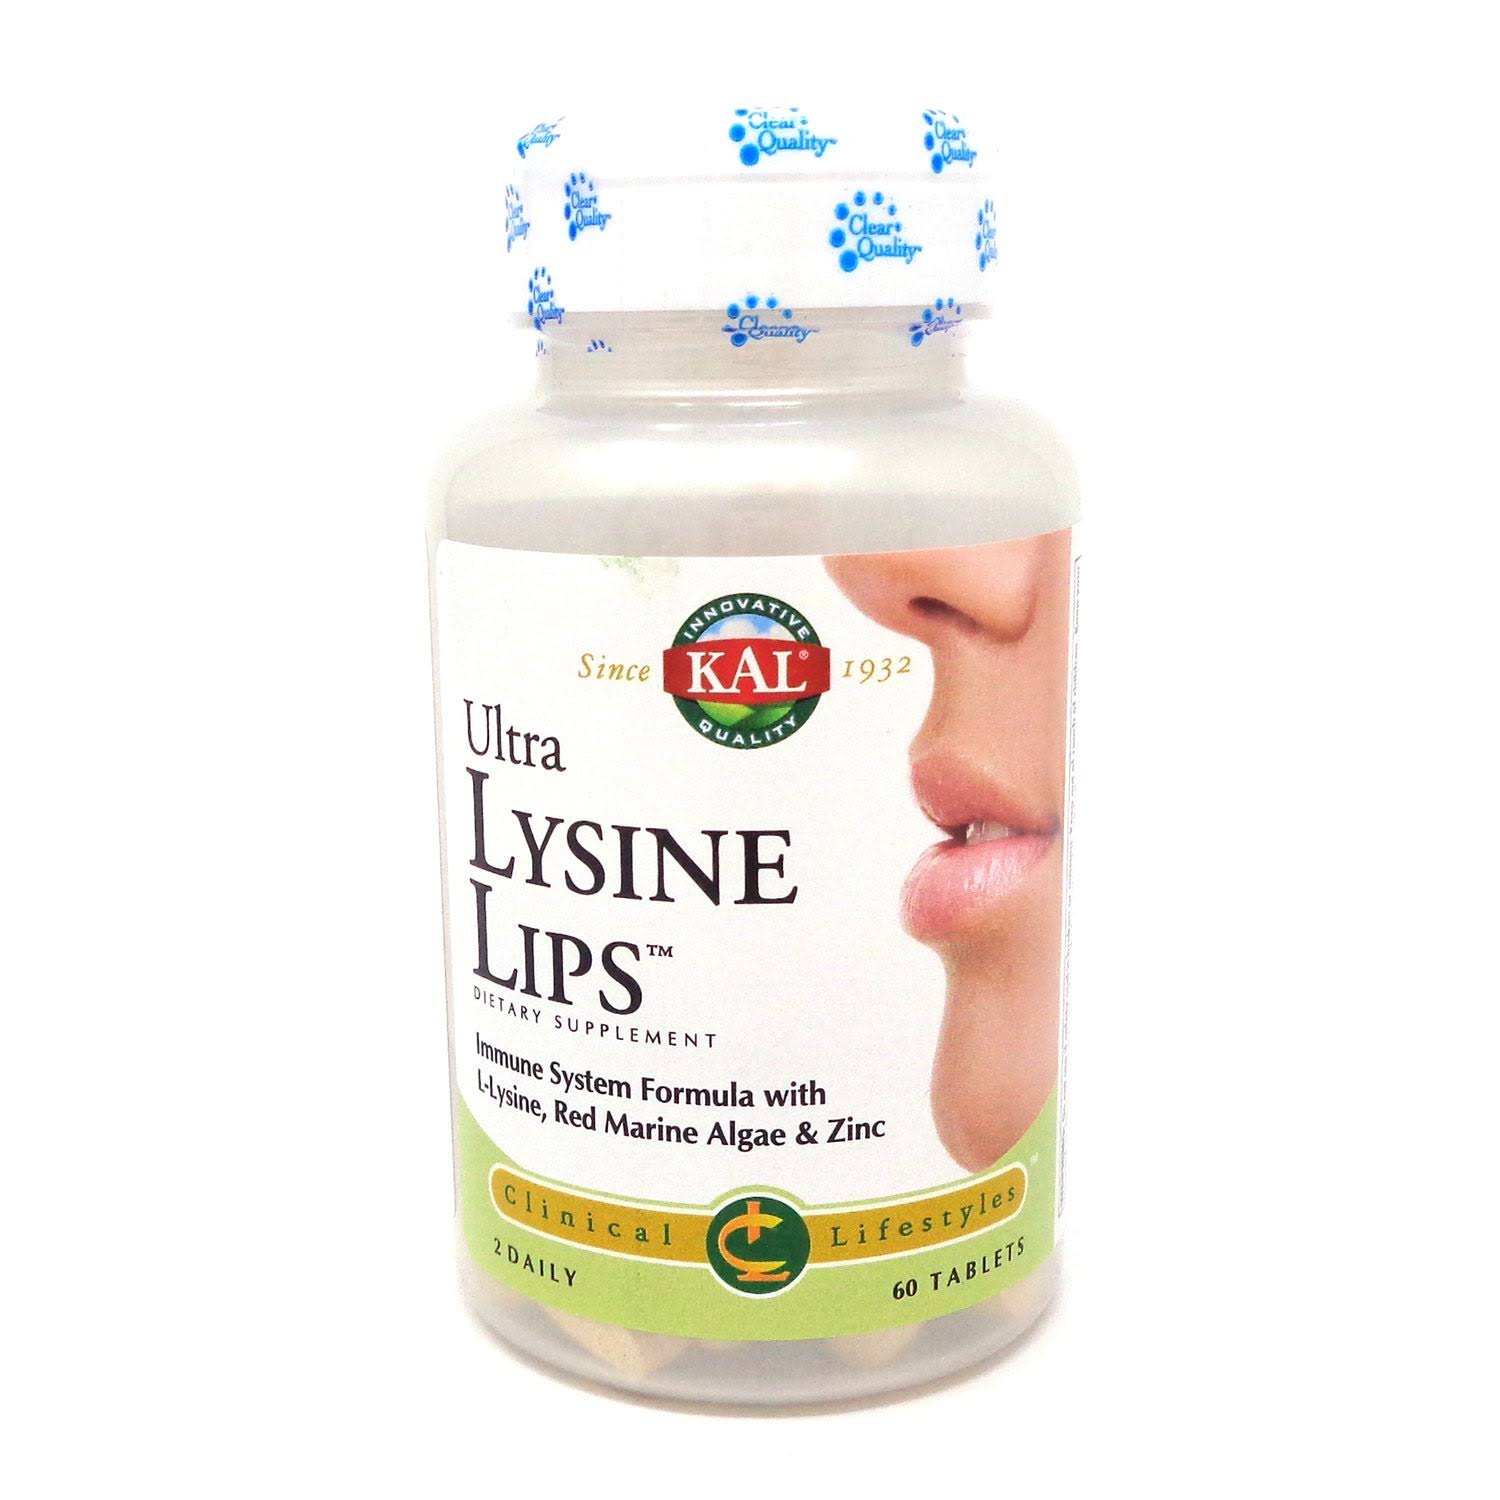 KAL Ultra Lysine Lips Supplement - 60 Tablets